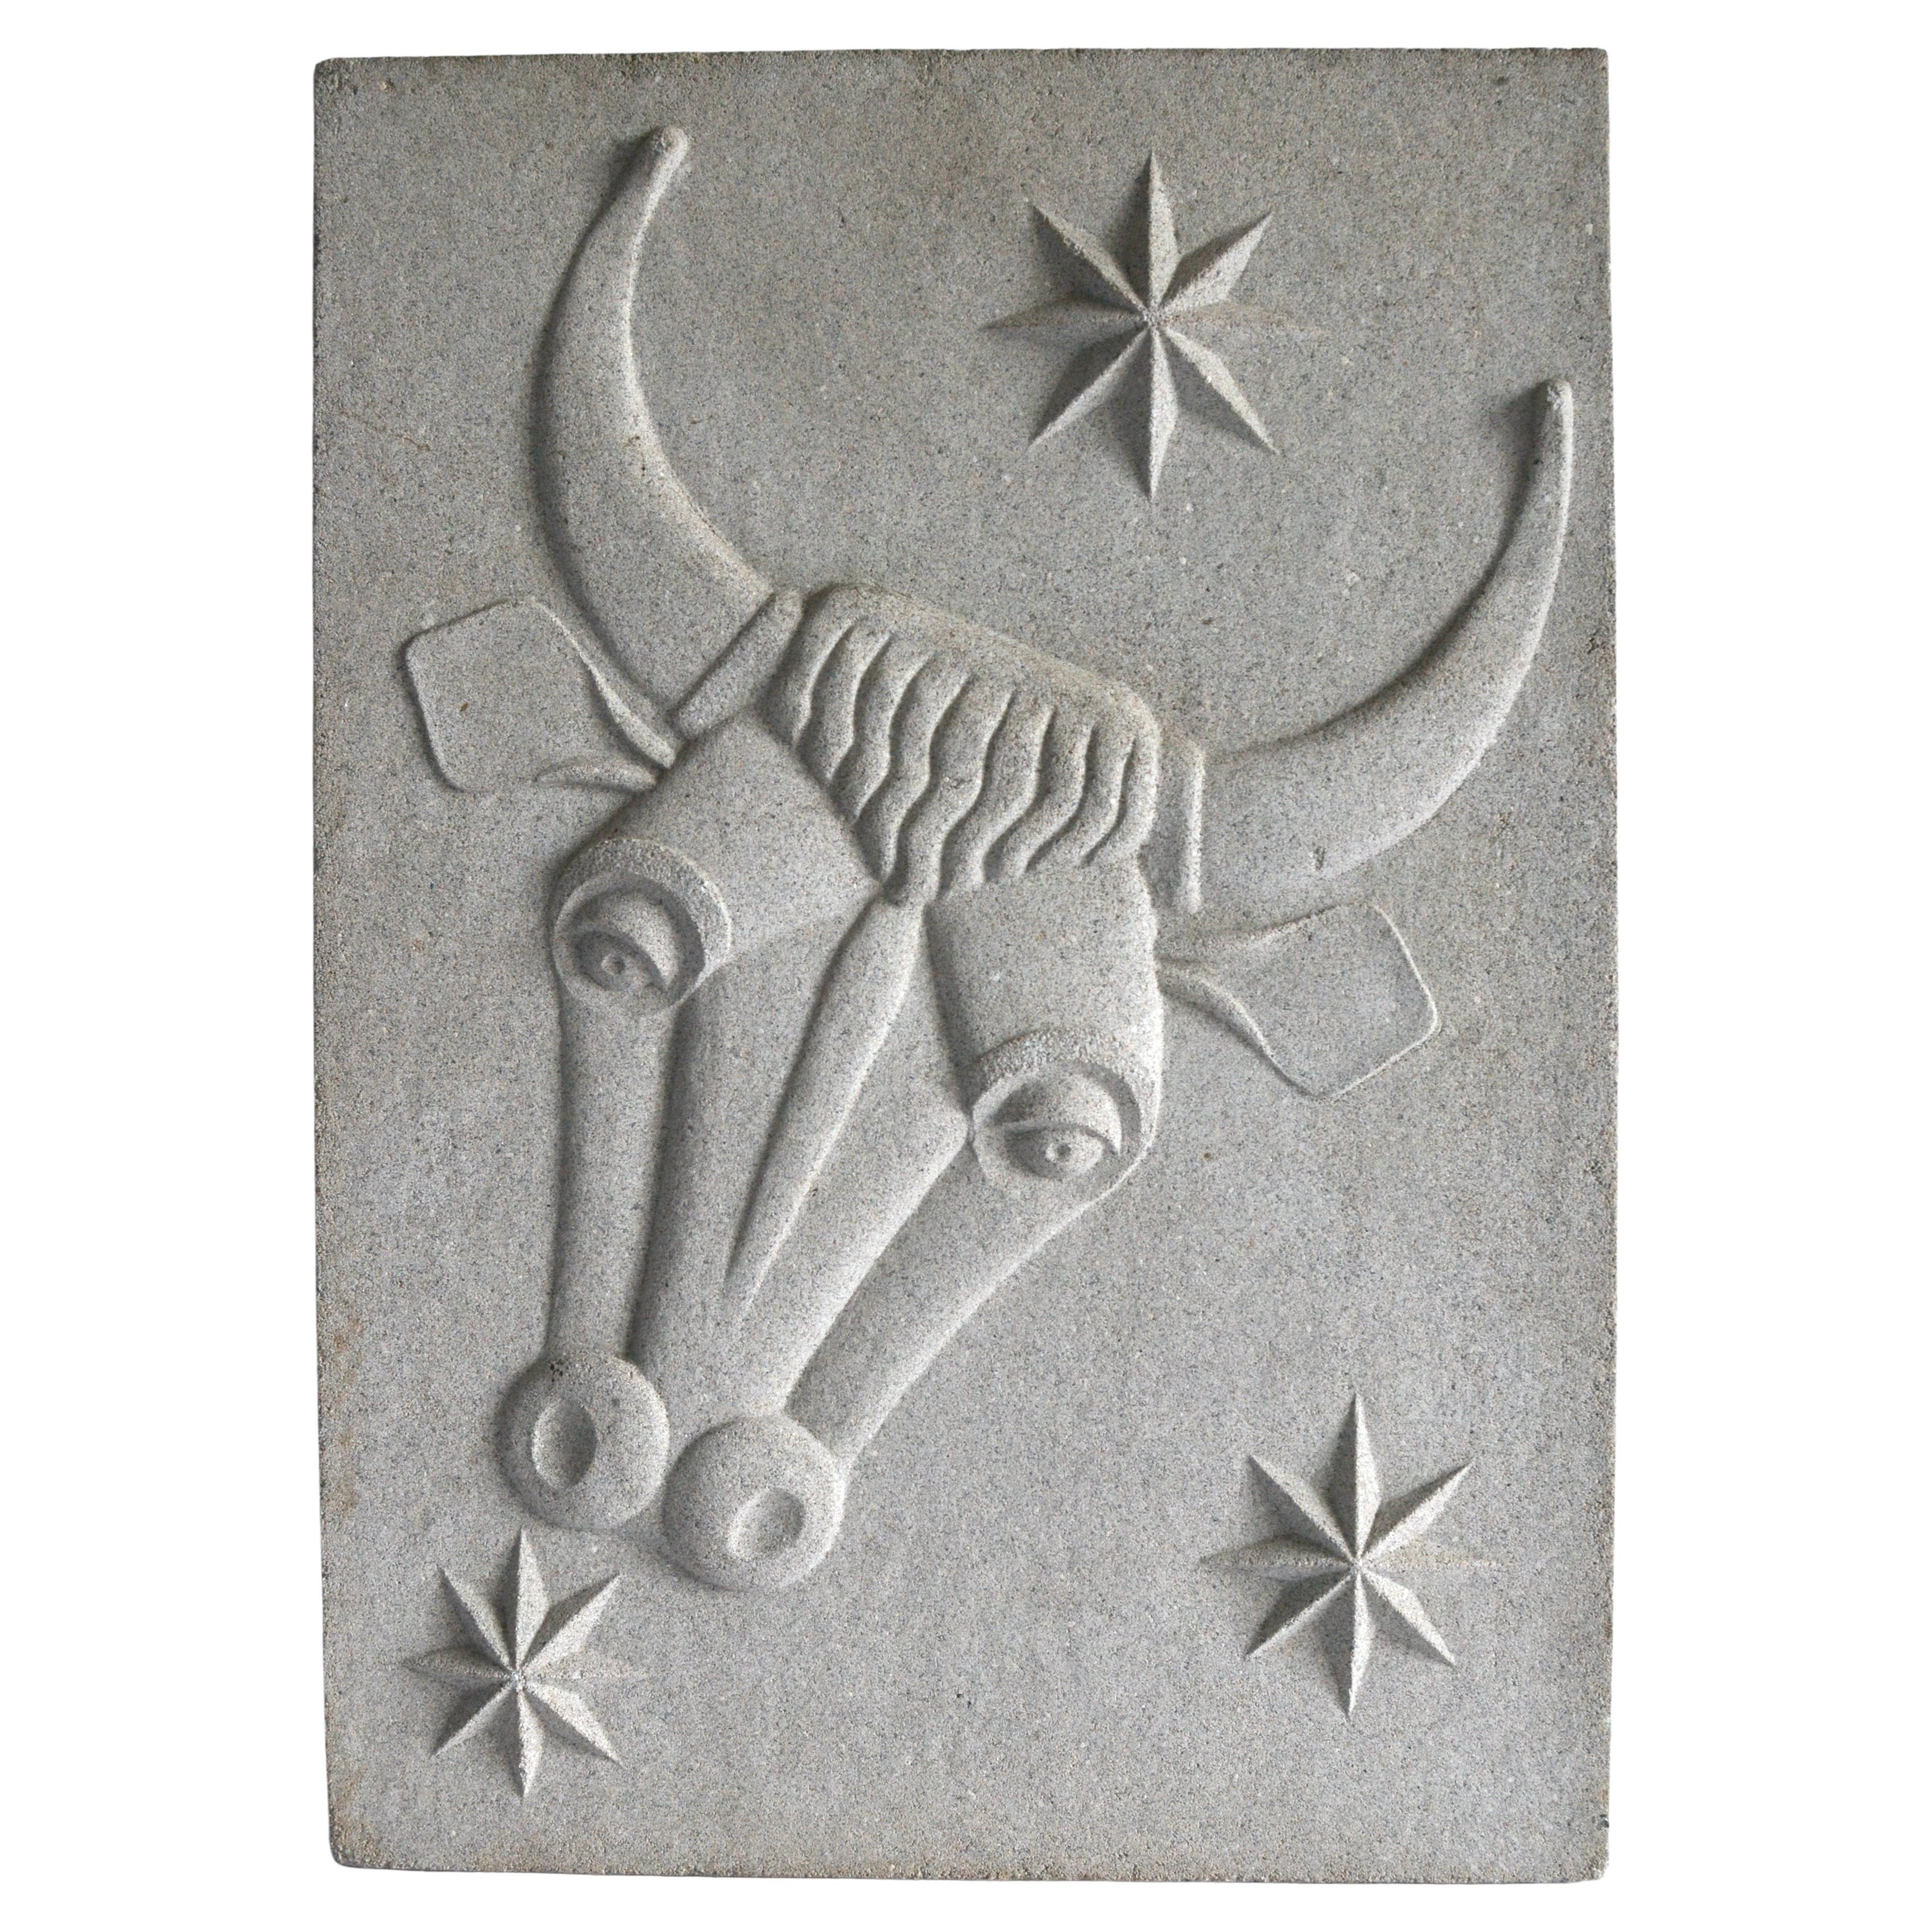 Zodiac Artificial Stone Relief Sign of Taurus, c. 1940